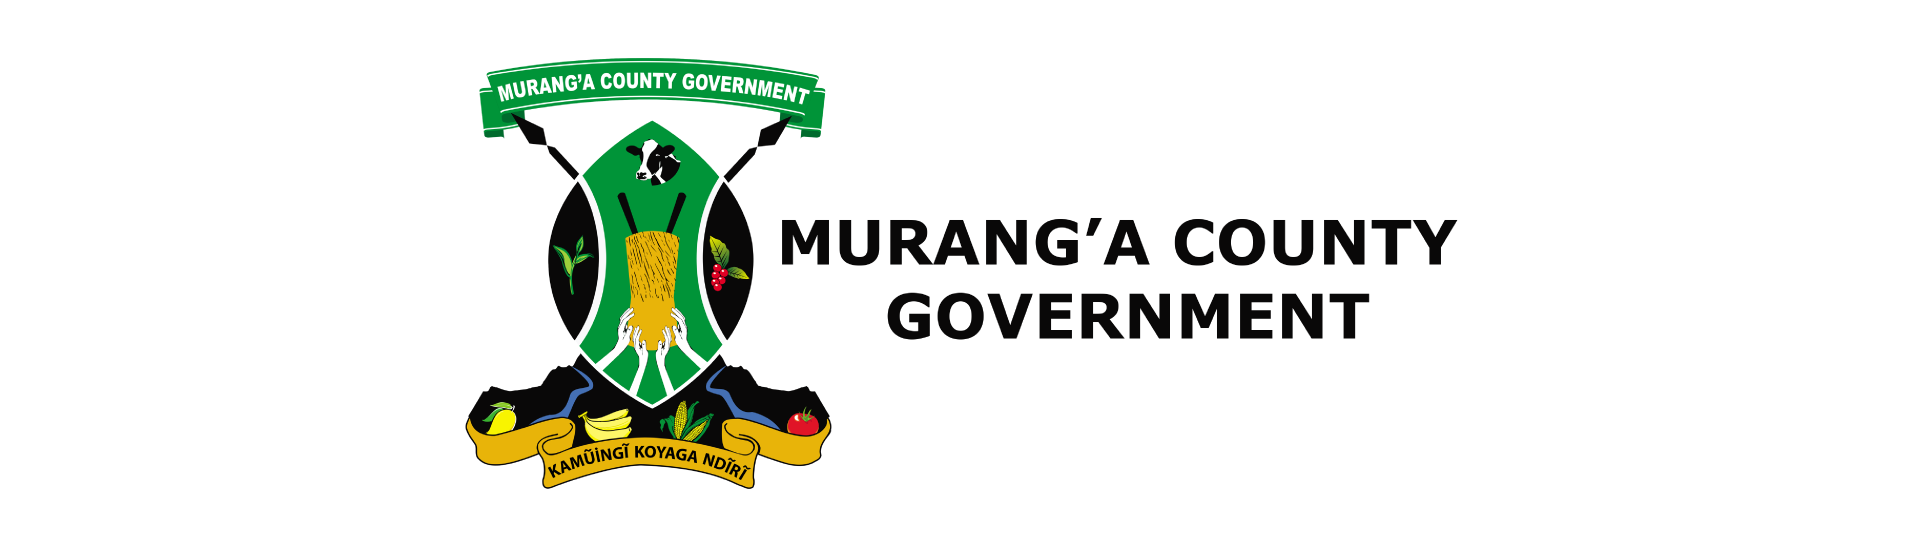 Murang'a County Government logo